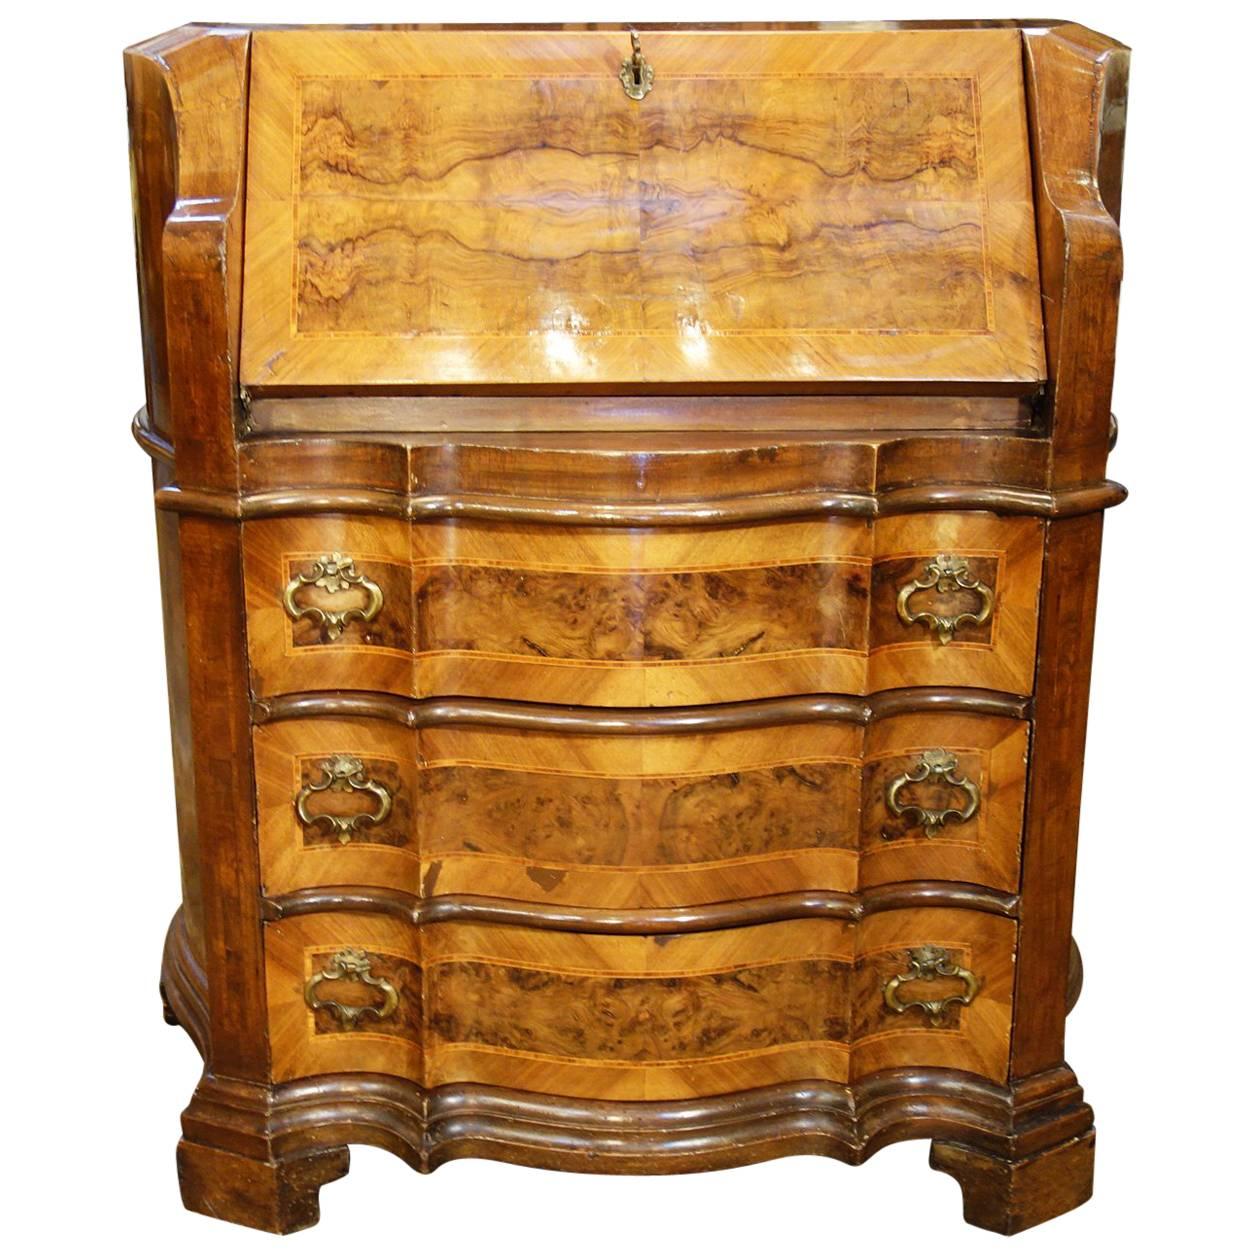 Late 19th Century Italian Walnut Burl Inlaid Louis XIV Secretary Drop Leaf Desk For Sale